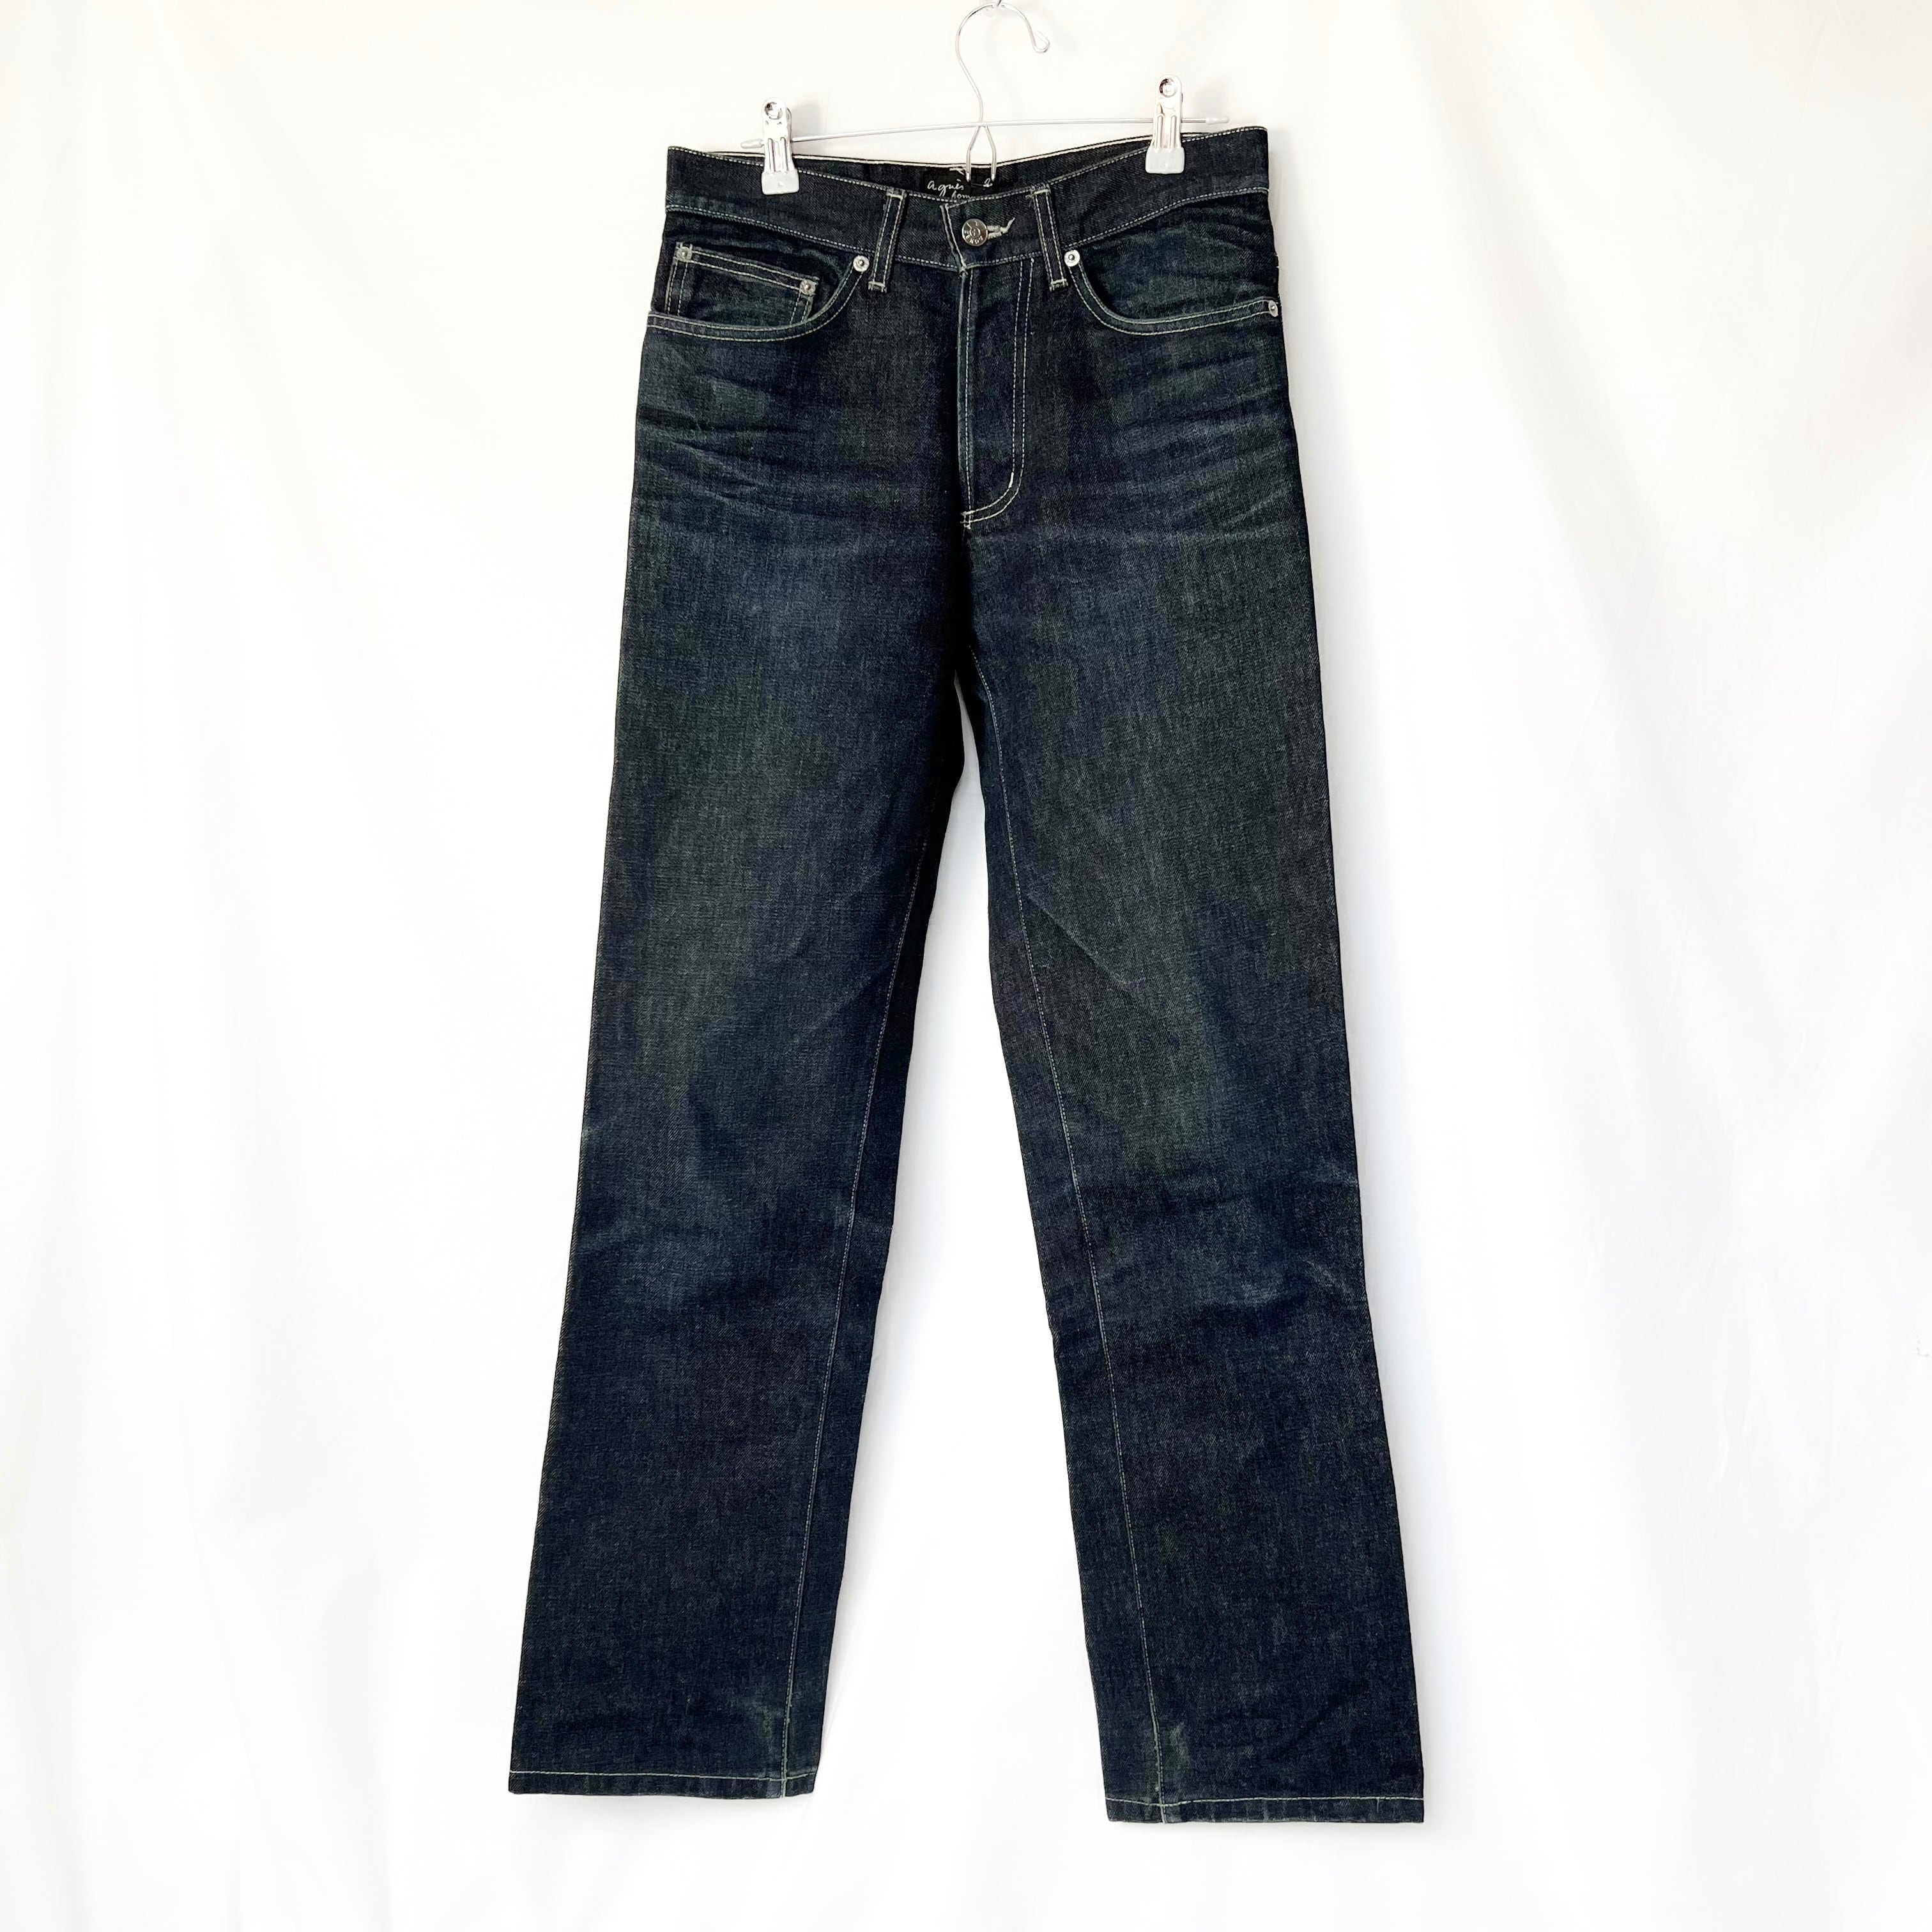 90s agnes b. denim pants made in france 濃紺デニム ストレート